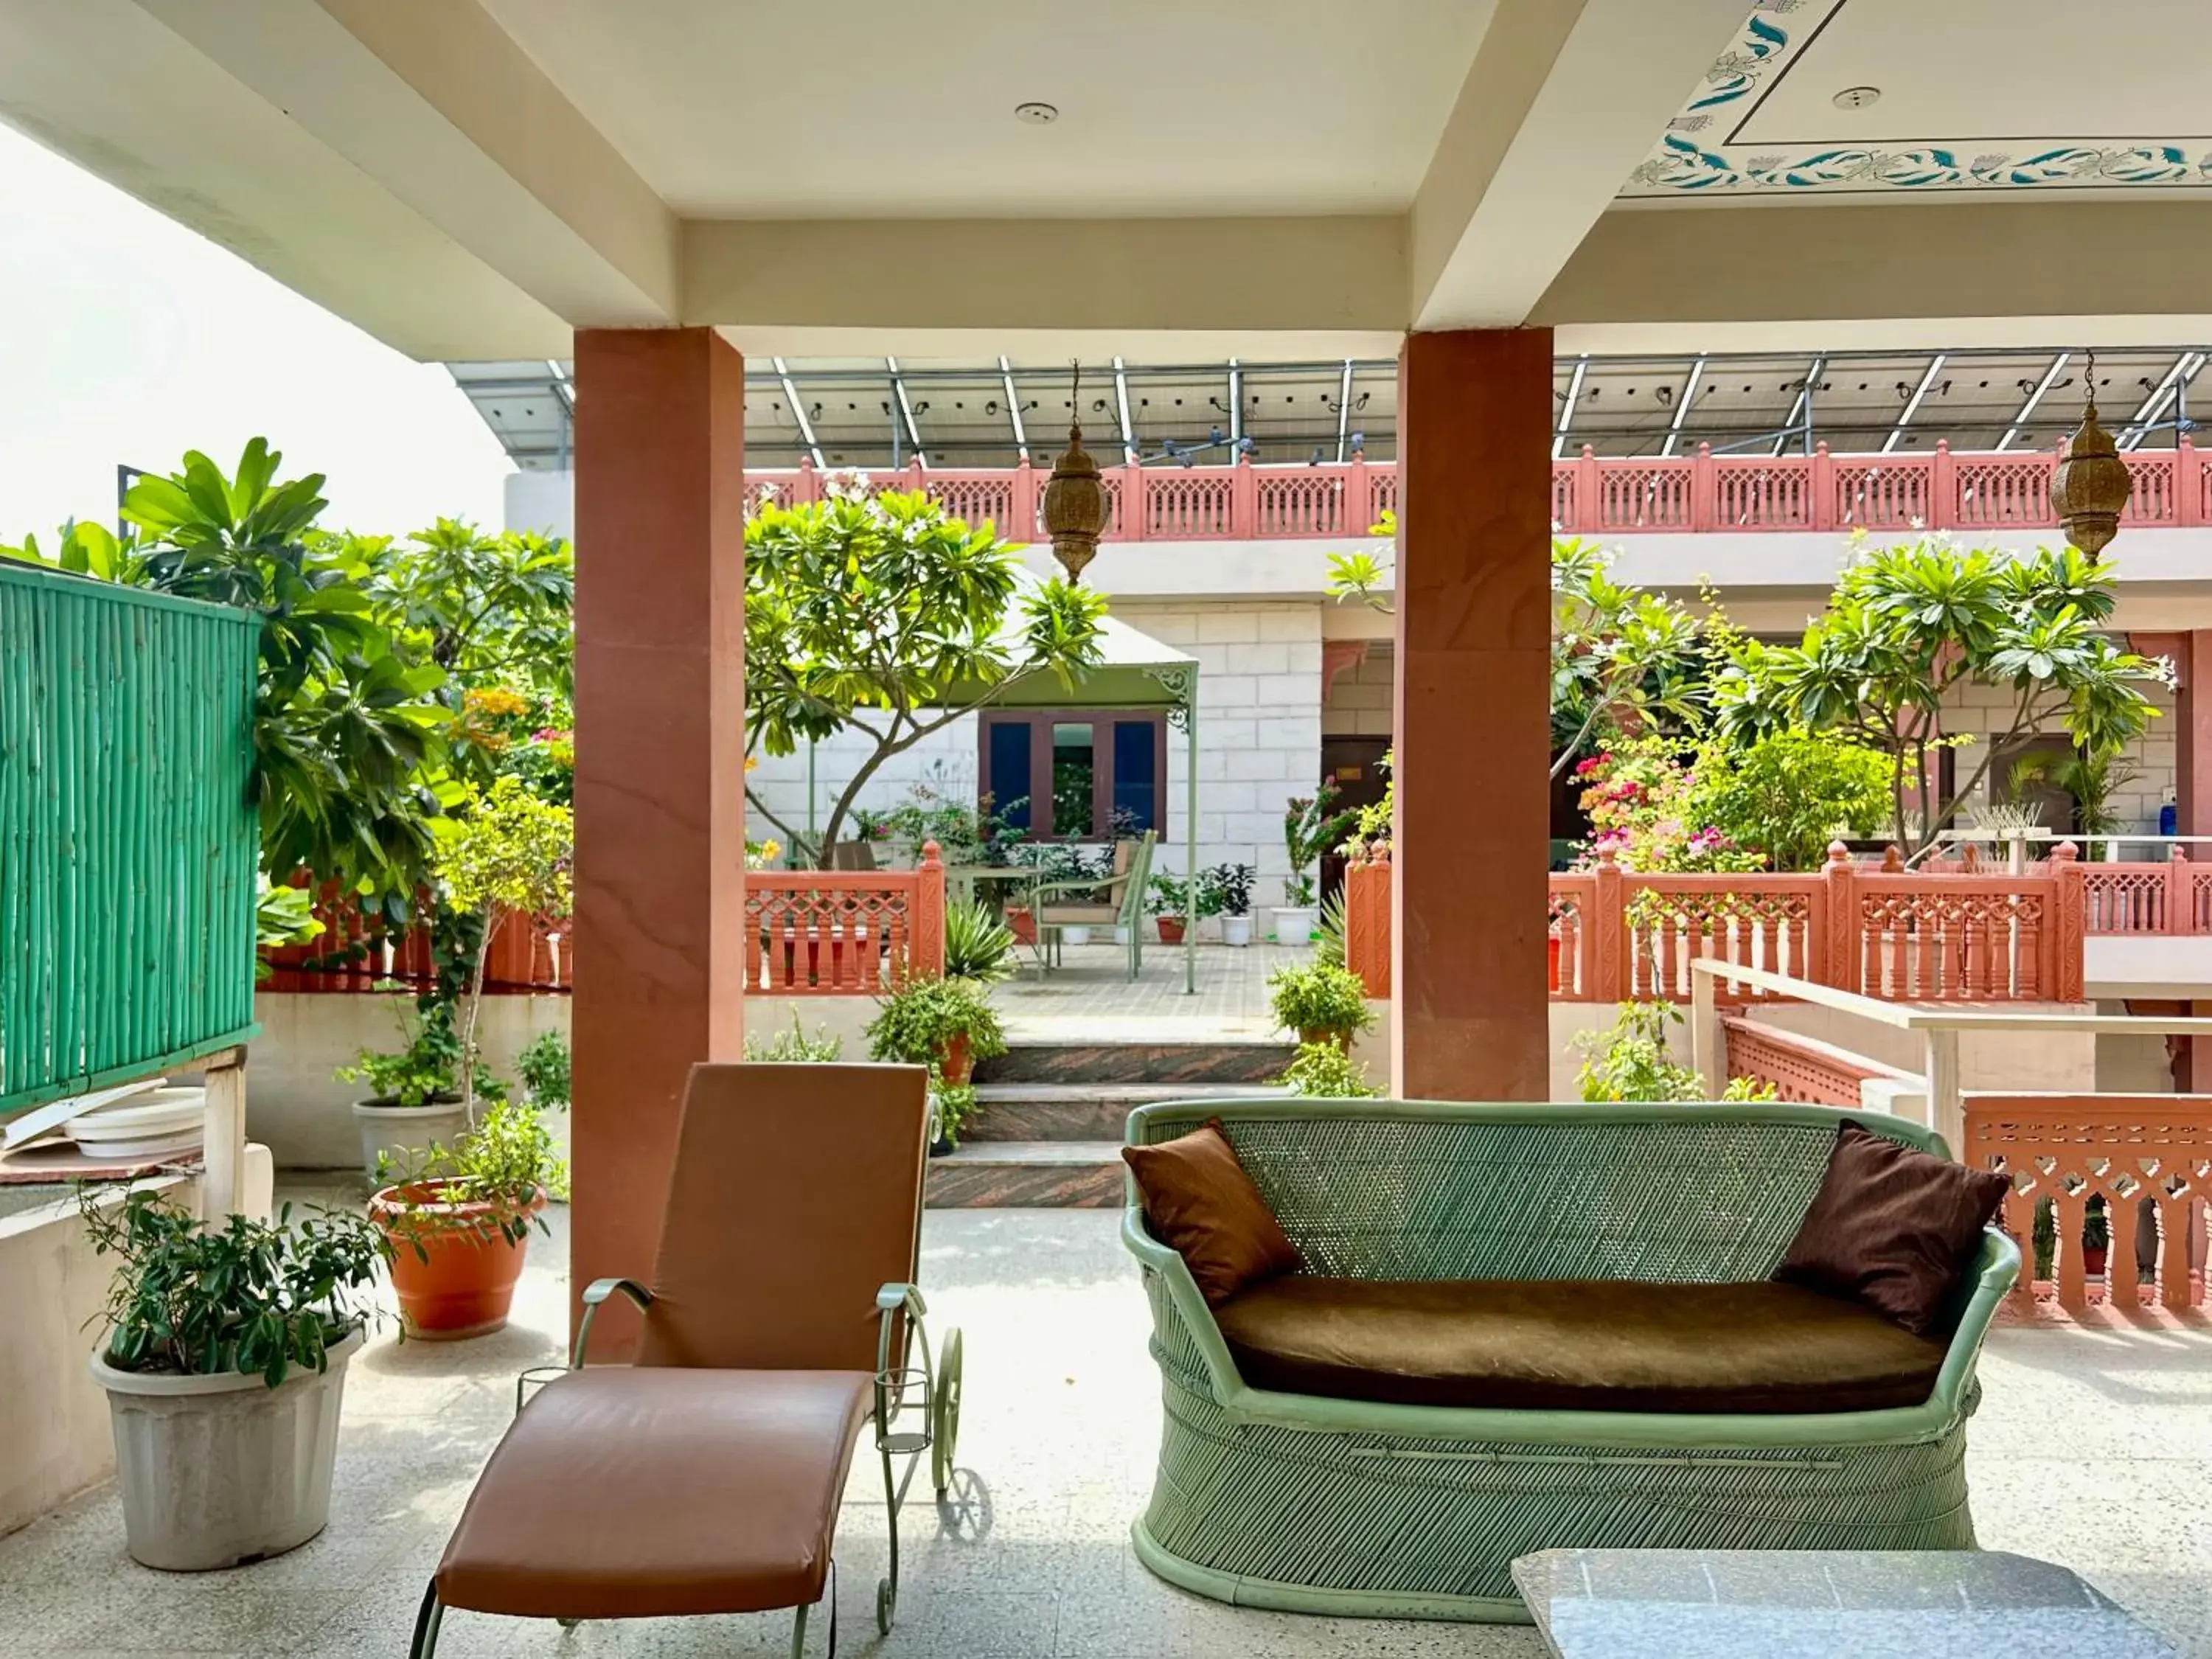 Inner courtyard view in Suryaa Villa Jaipur - A Boutique Heritage Haveli